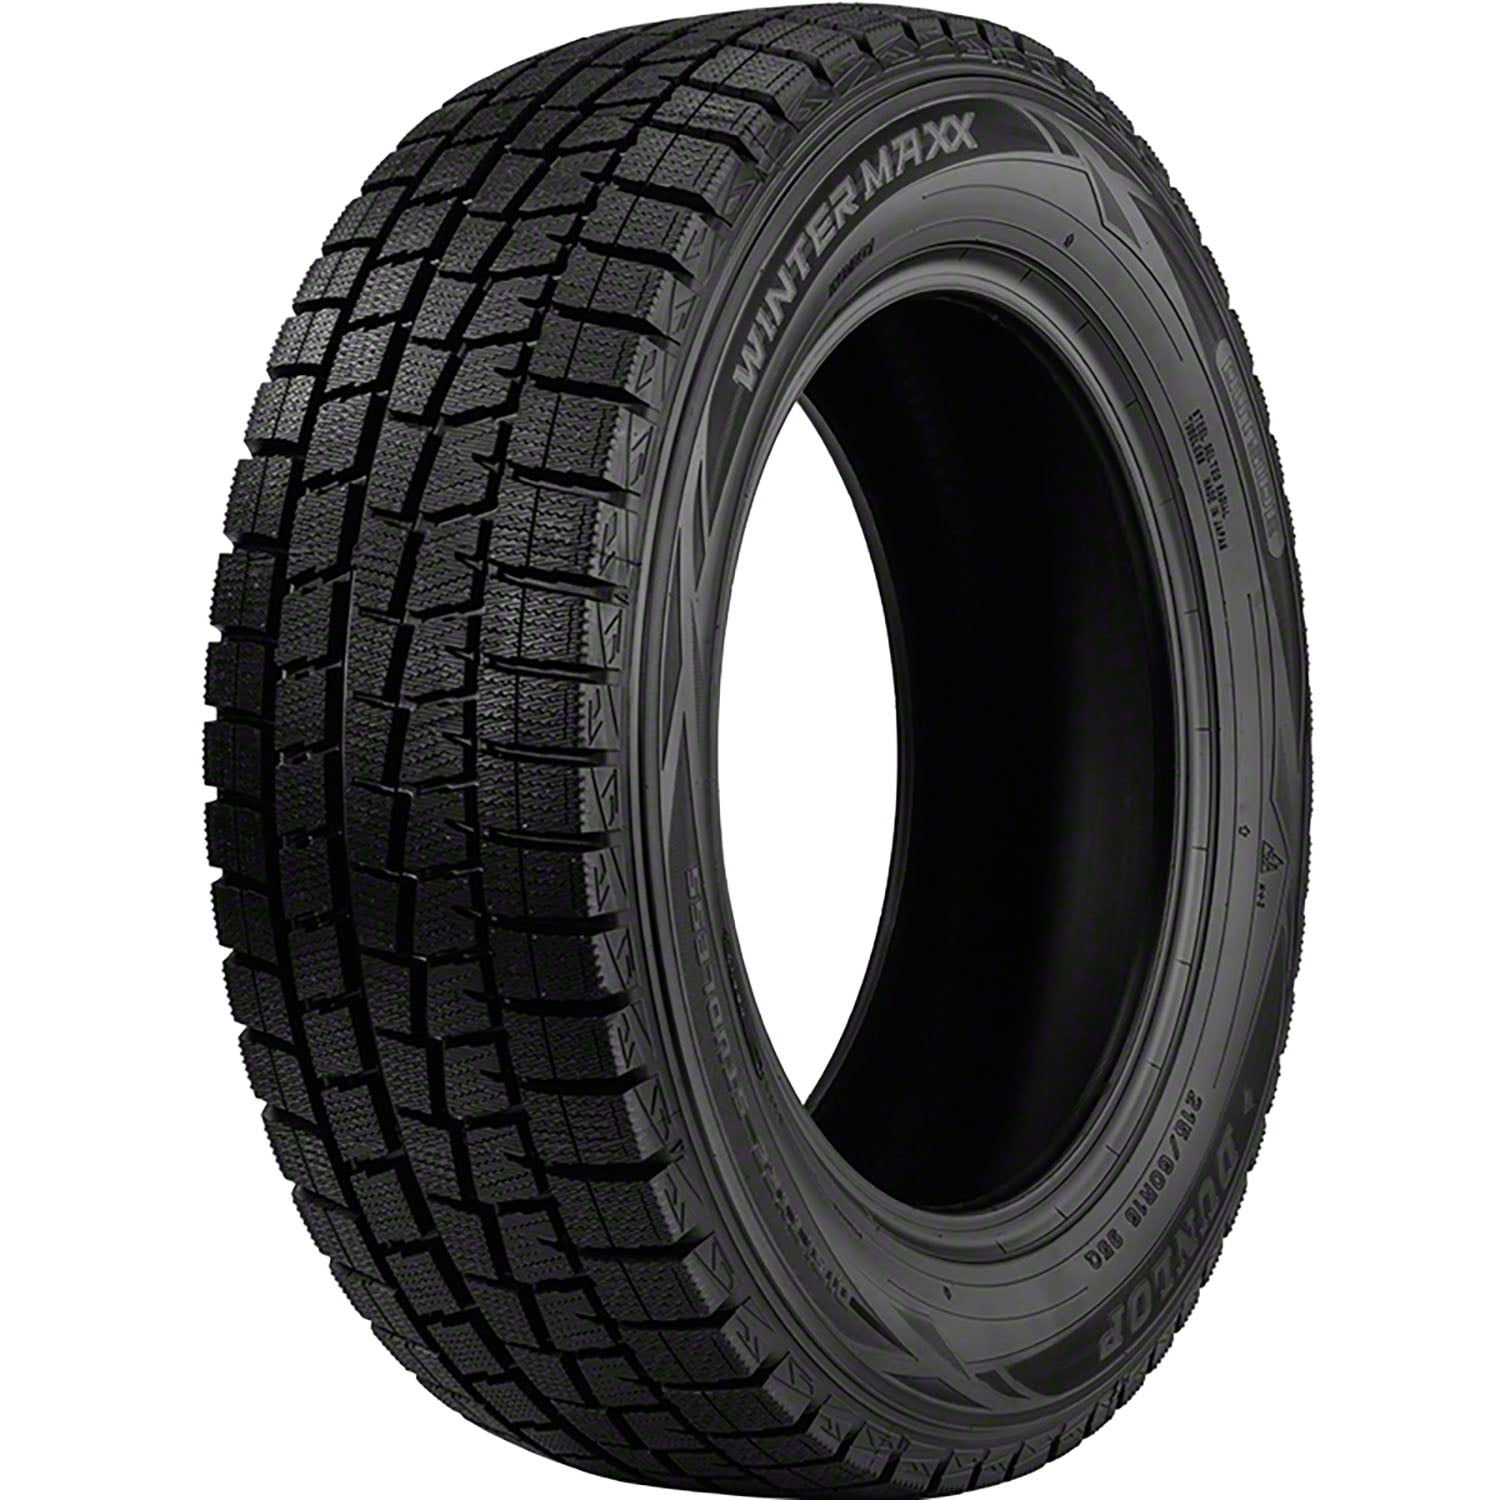 Dunlop Winter Maxx Winter Radial Tire 205/65R16 95T 